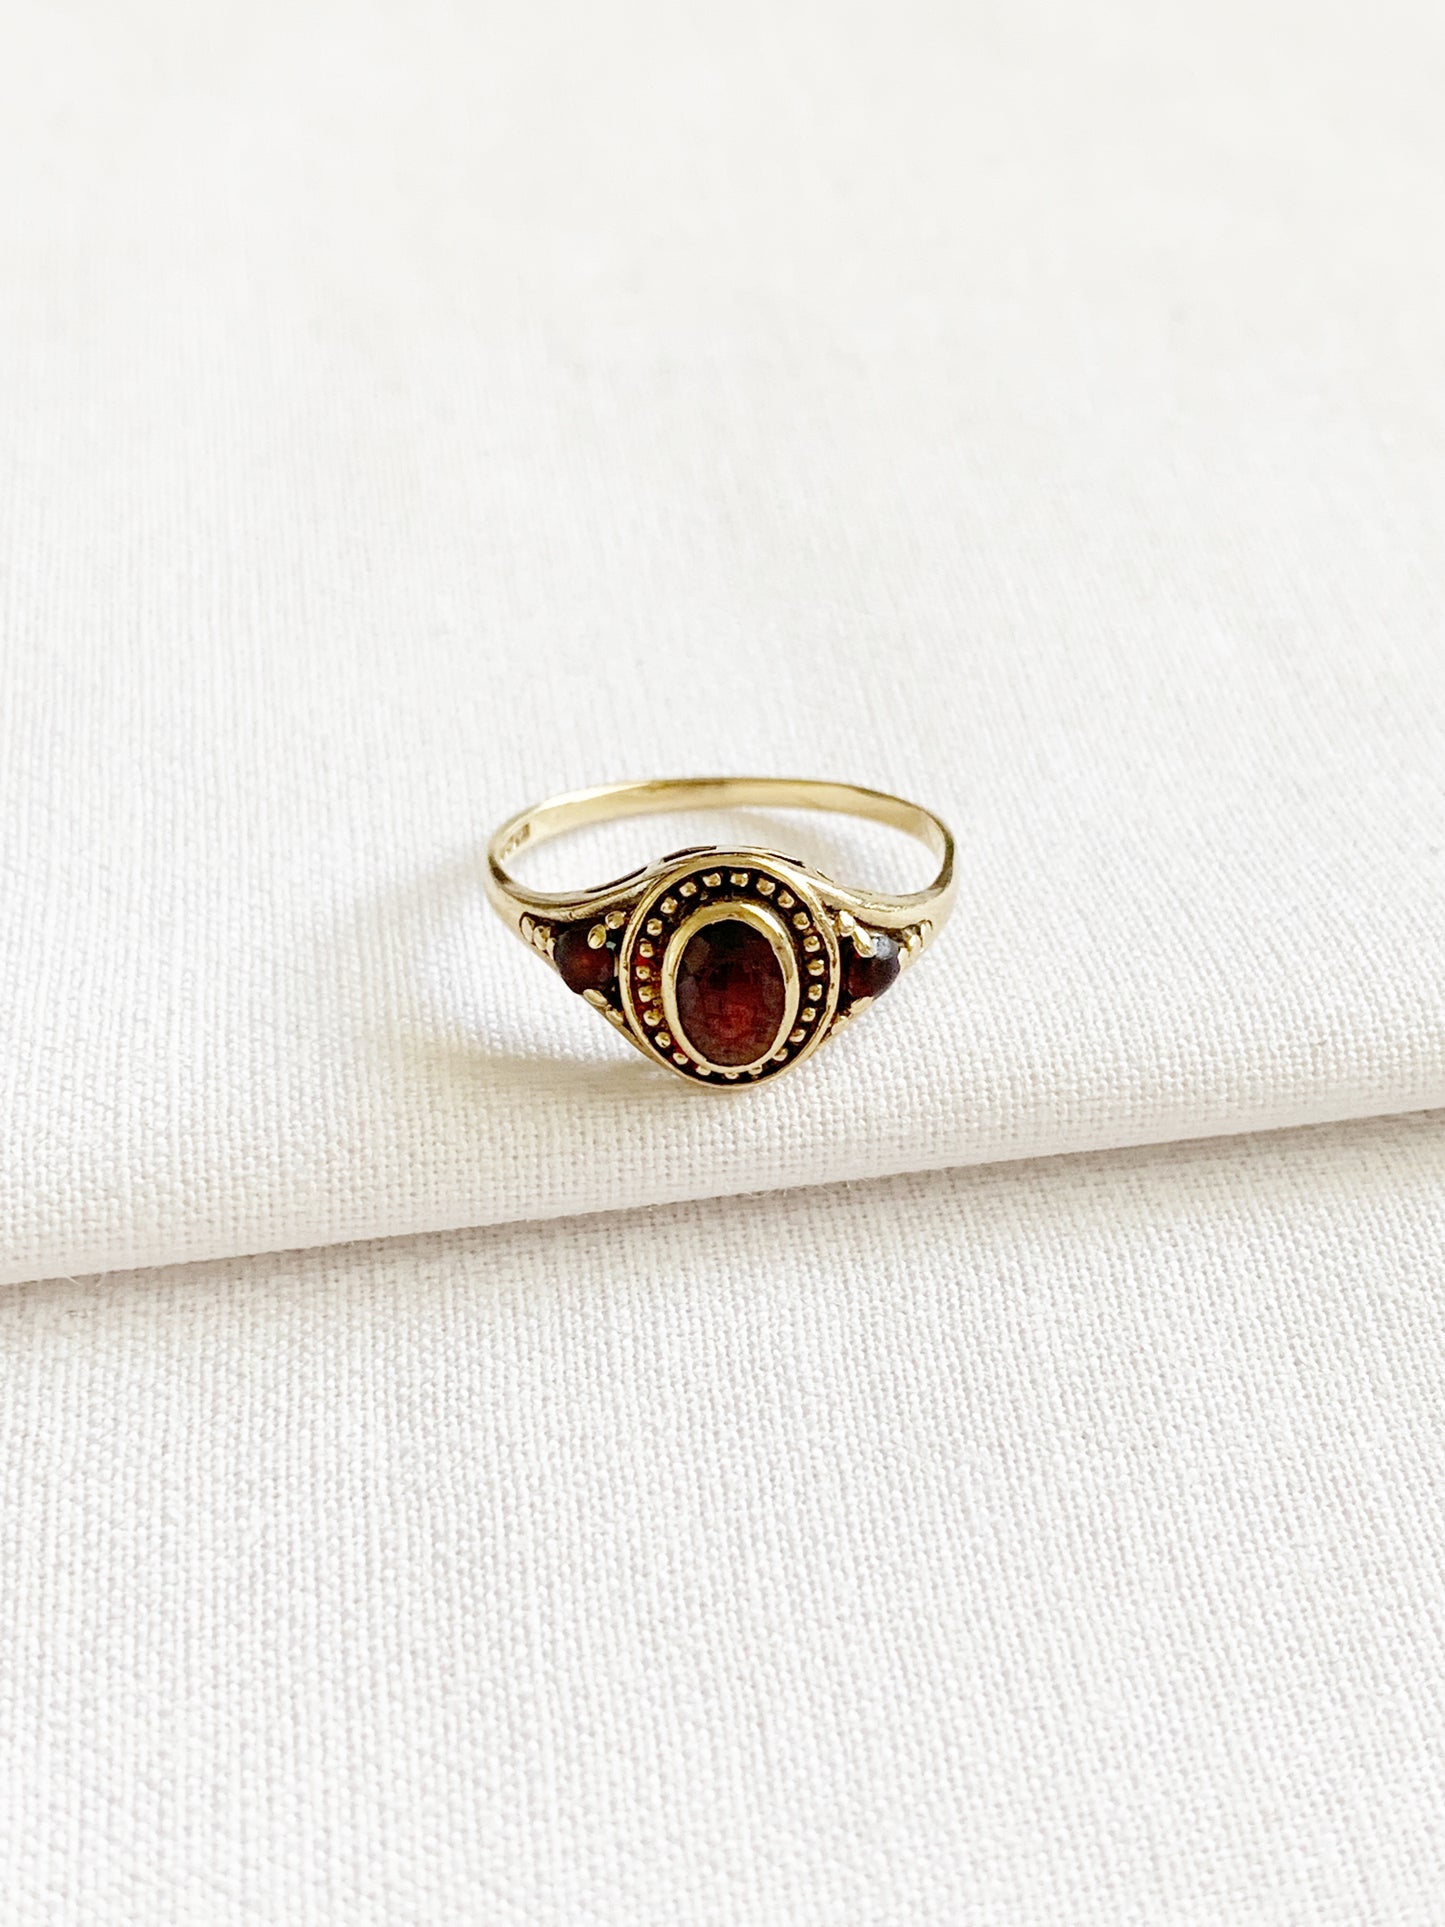 Vintage 9ct Gold Art Deco Style Garnet Ring